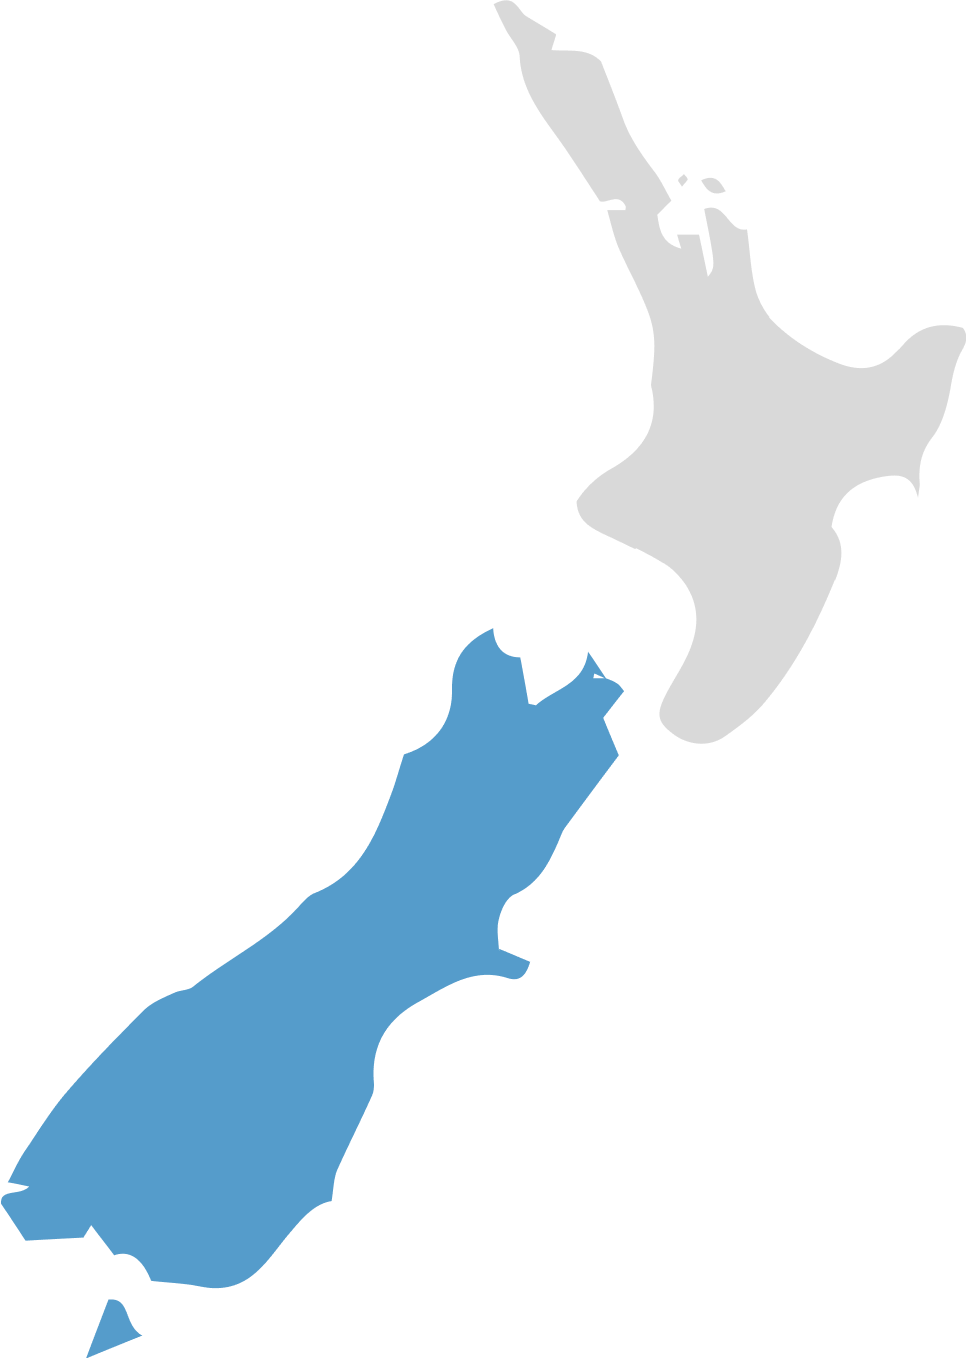 Image of South Island